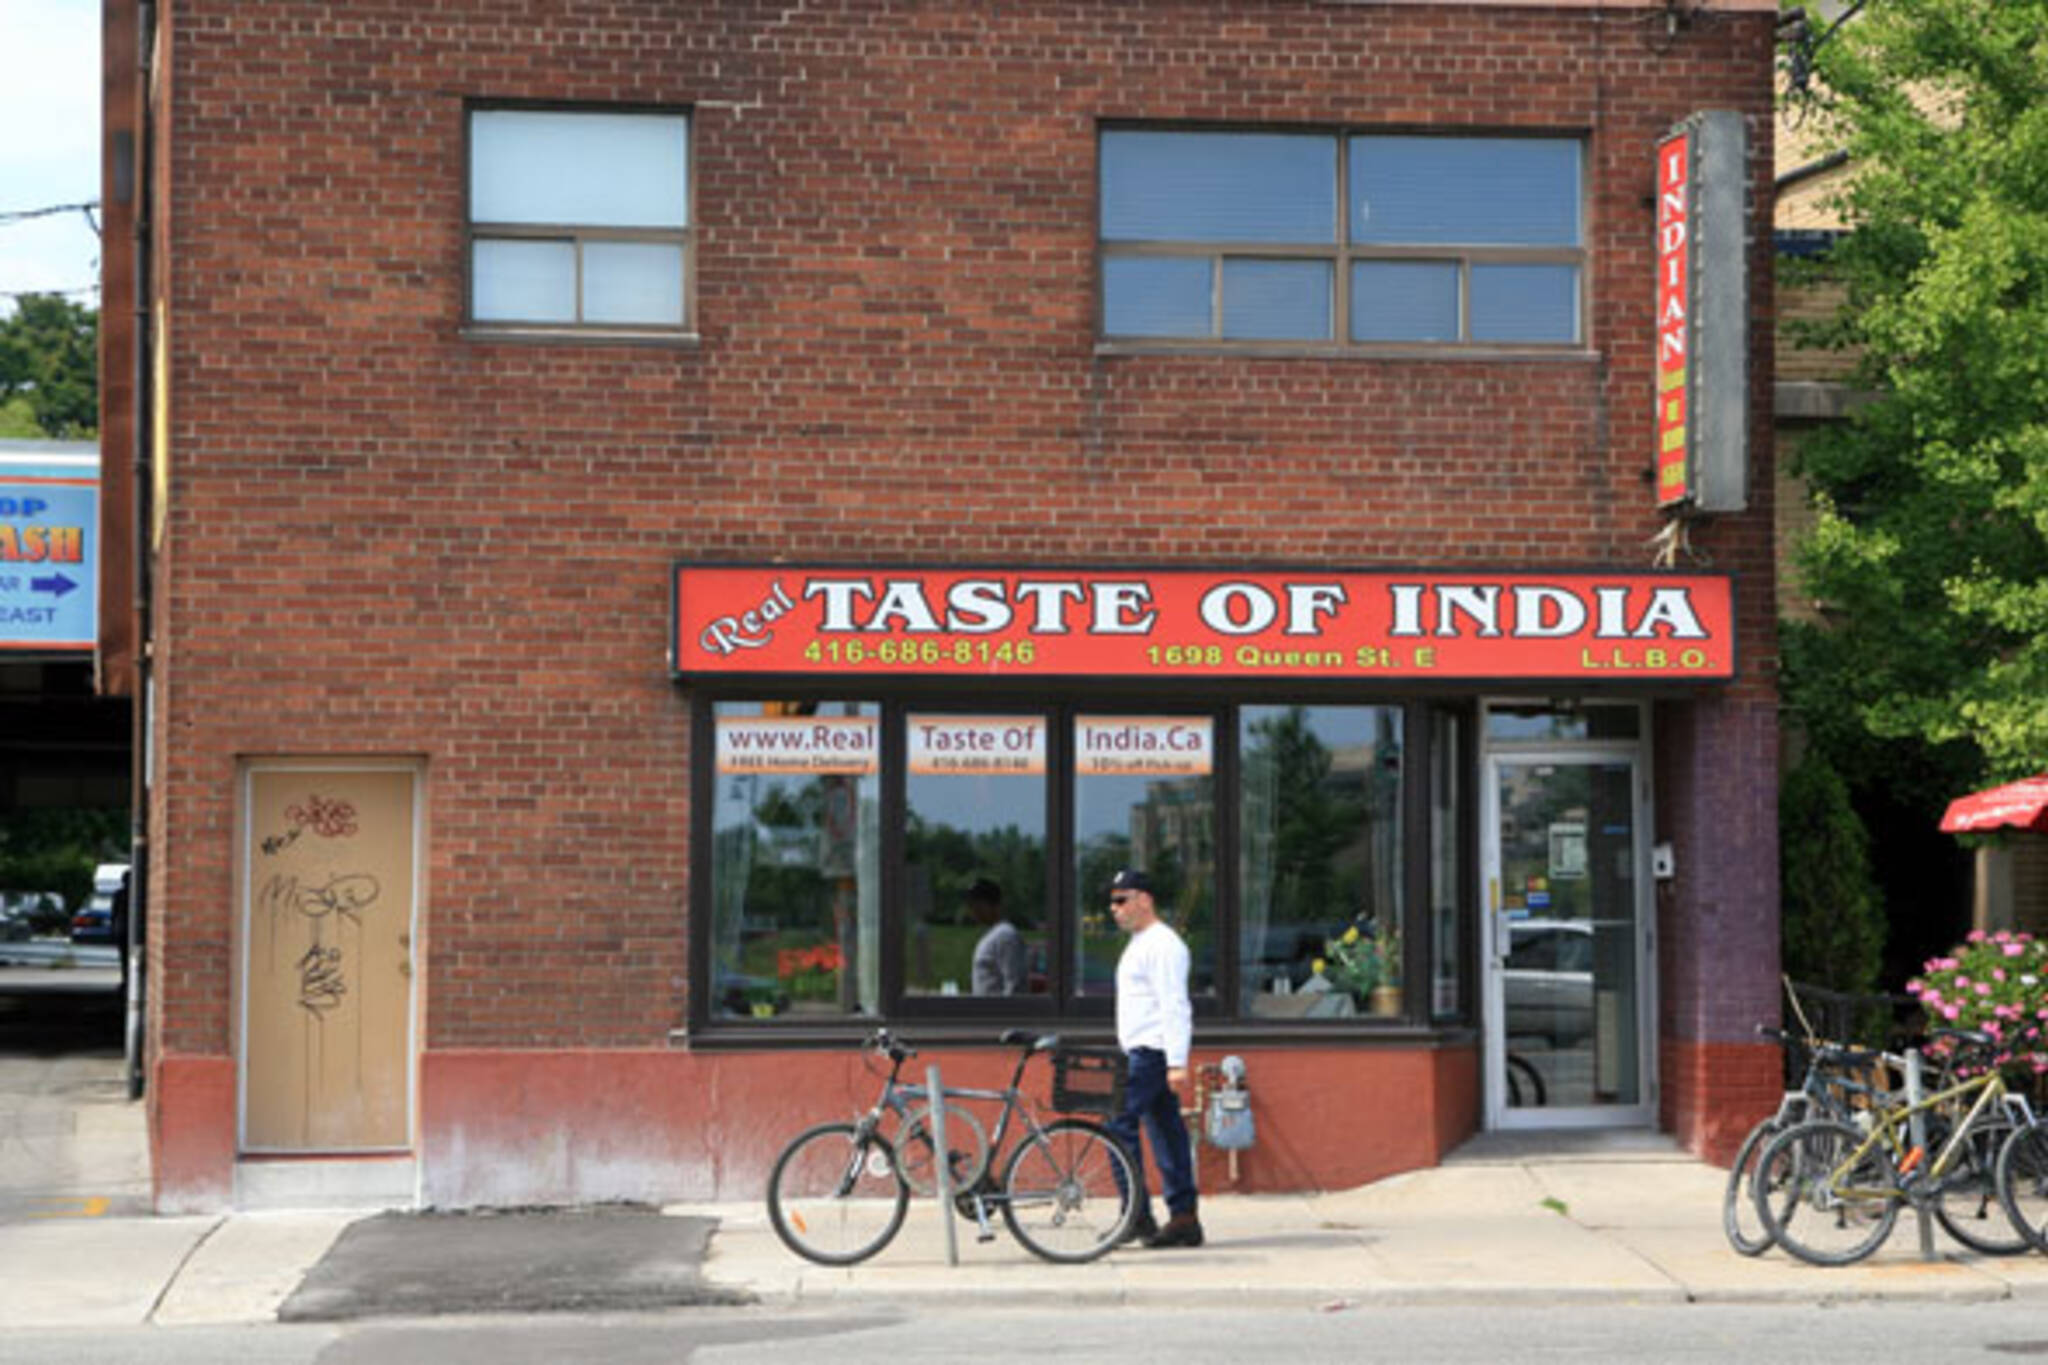 Real Taste of India Toronto